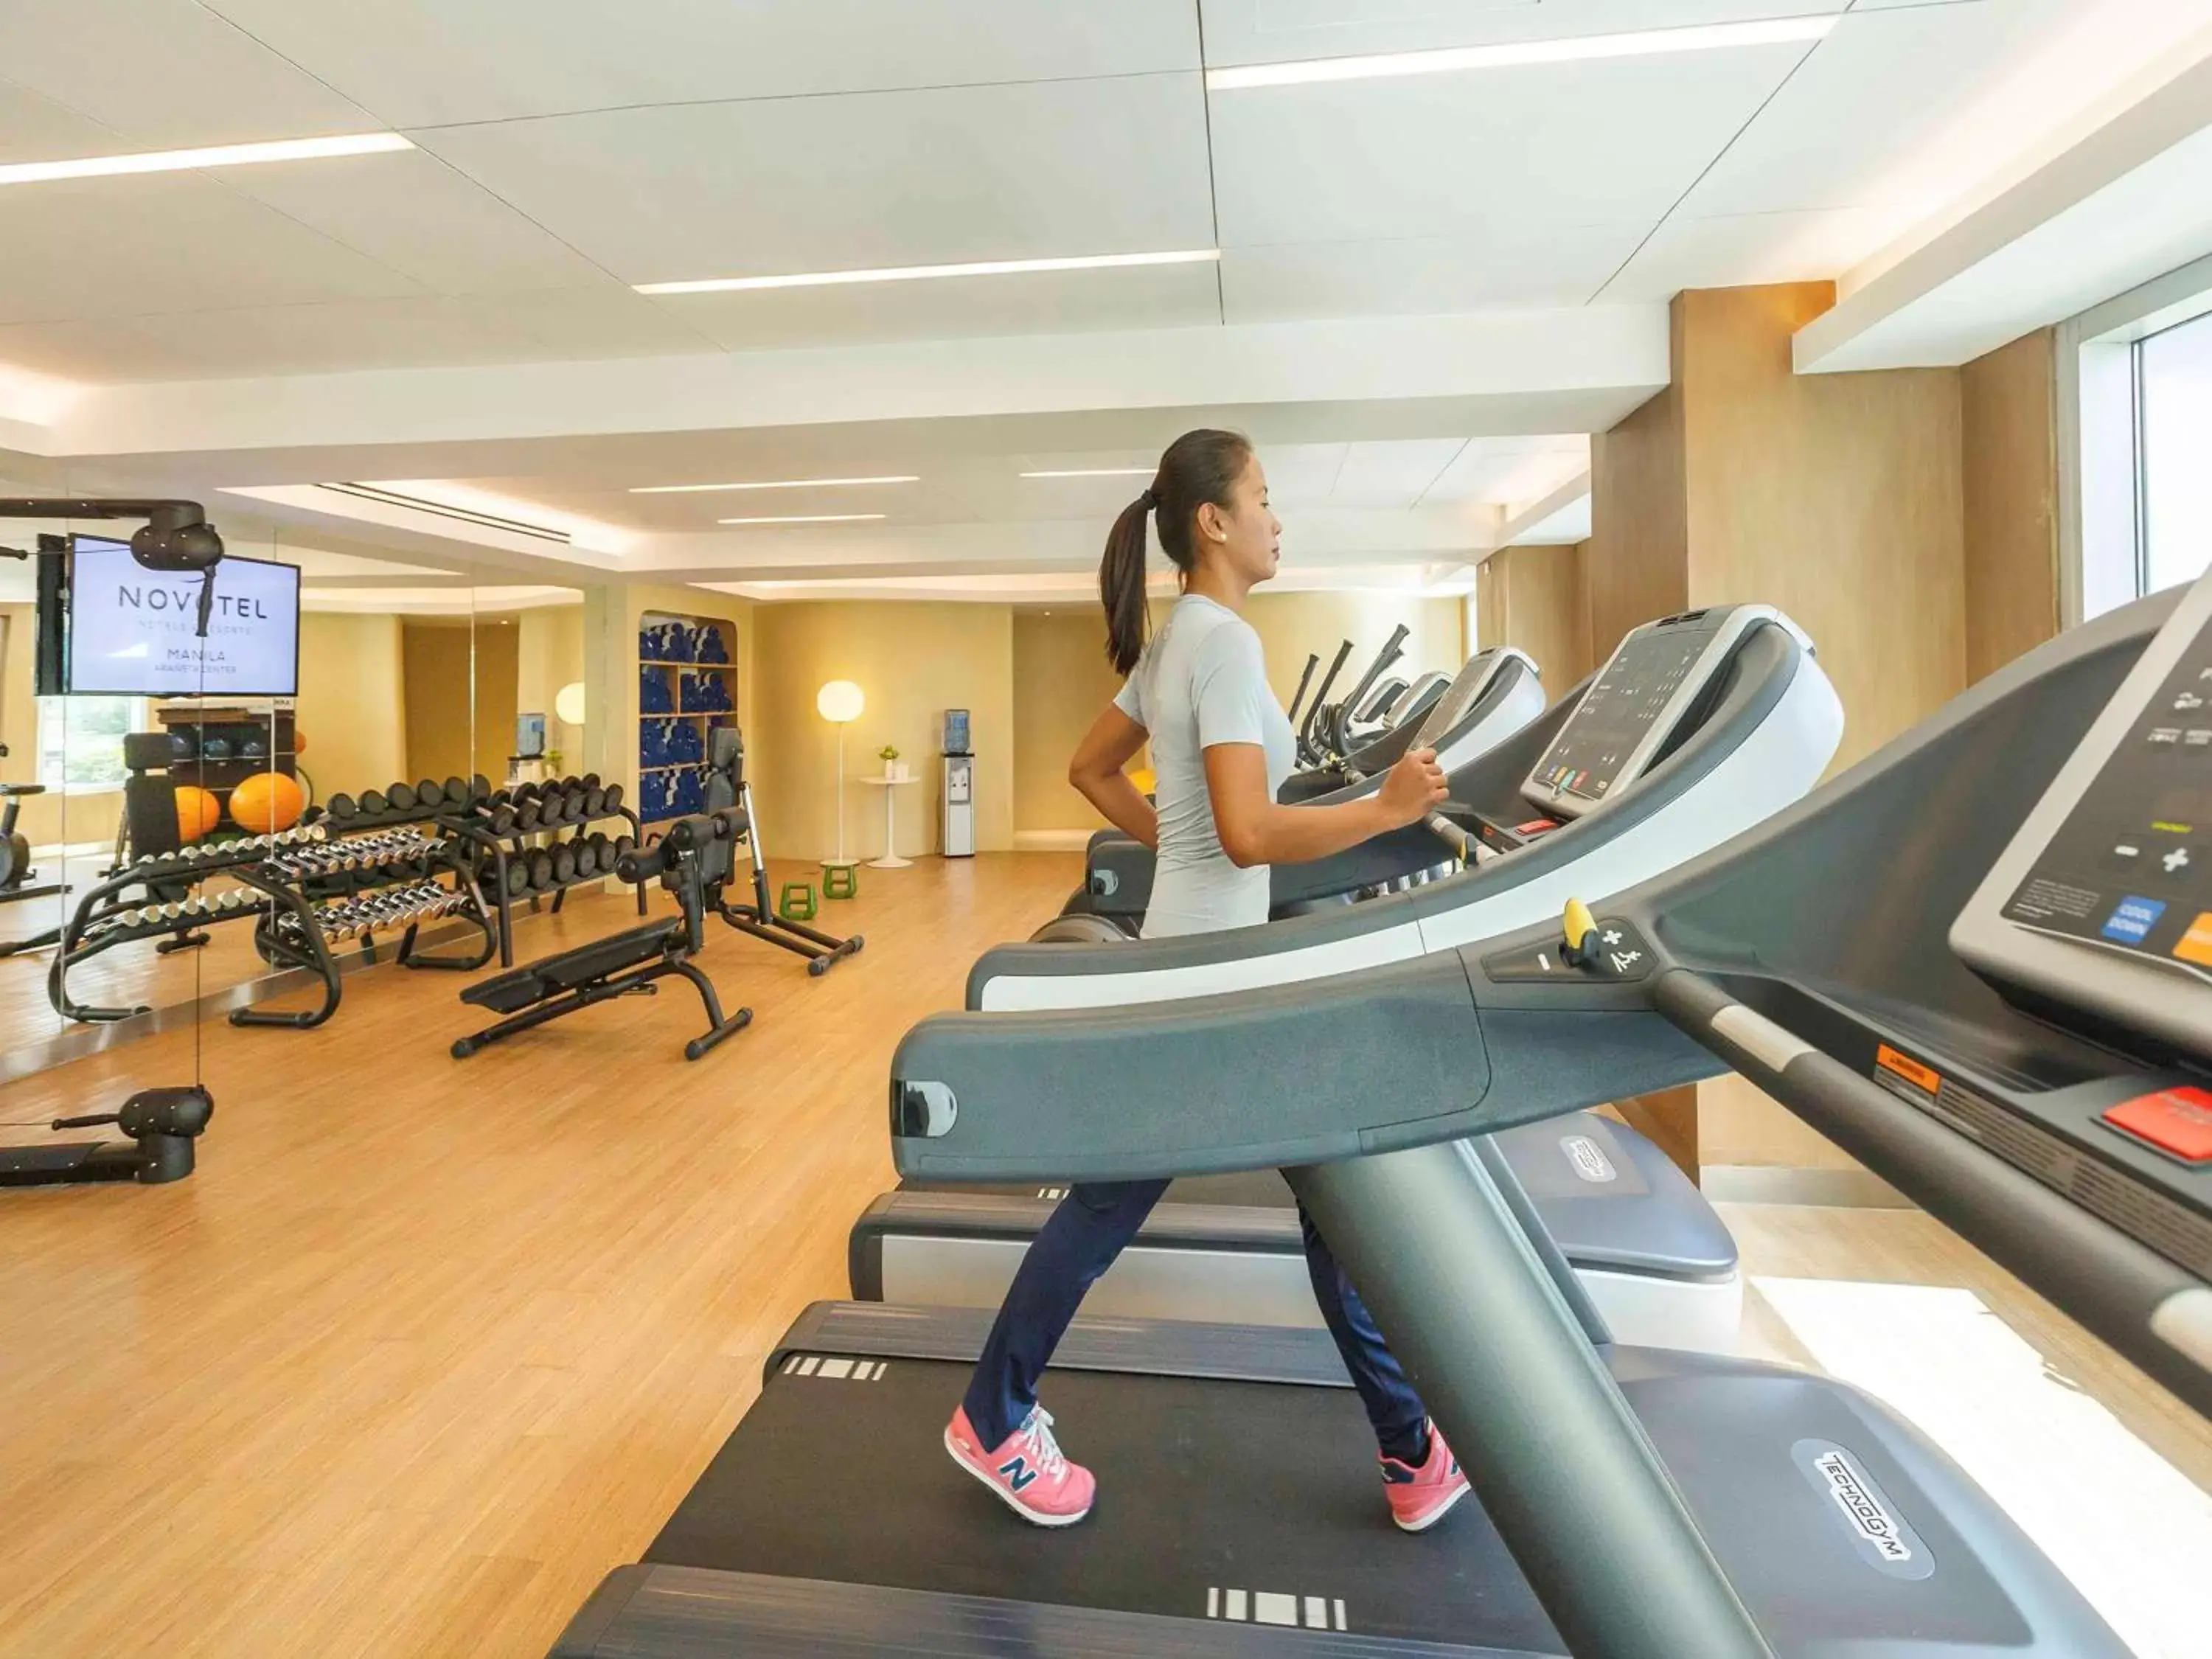 Fitness centre/facilities, Fitness Center/Facilities in Novotel Manila Araneta City Hotel